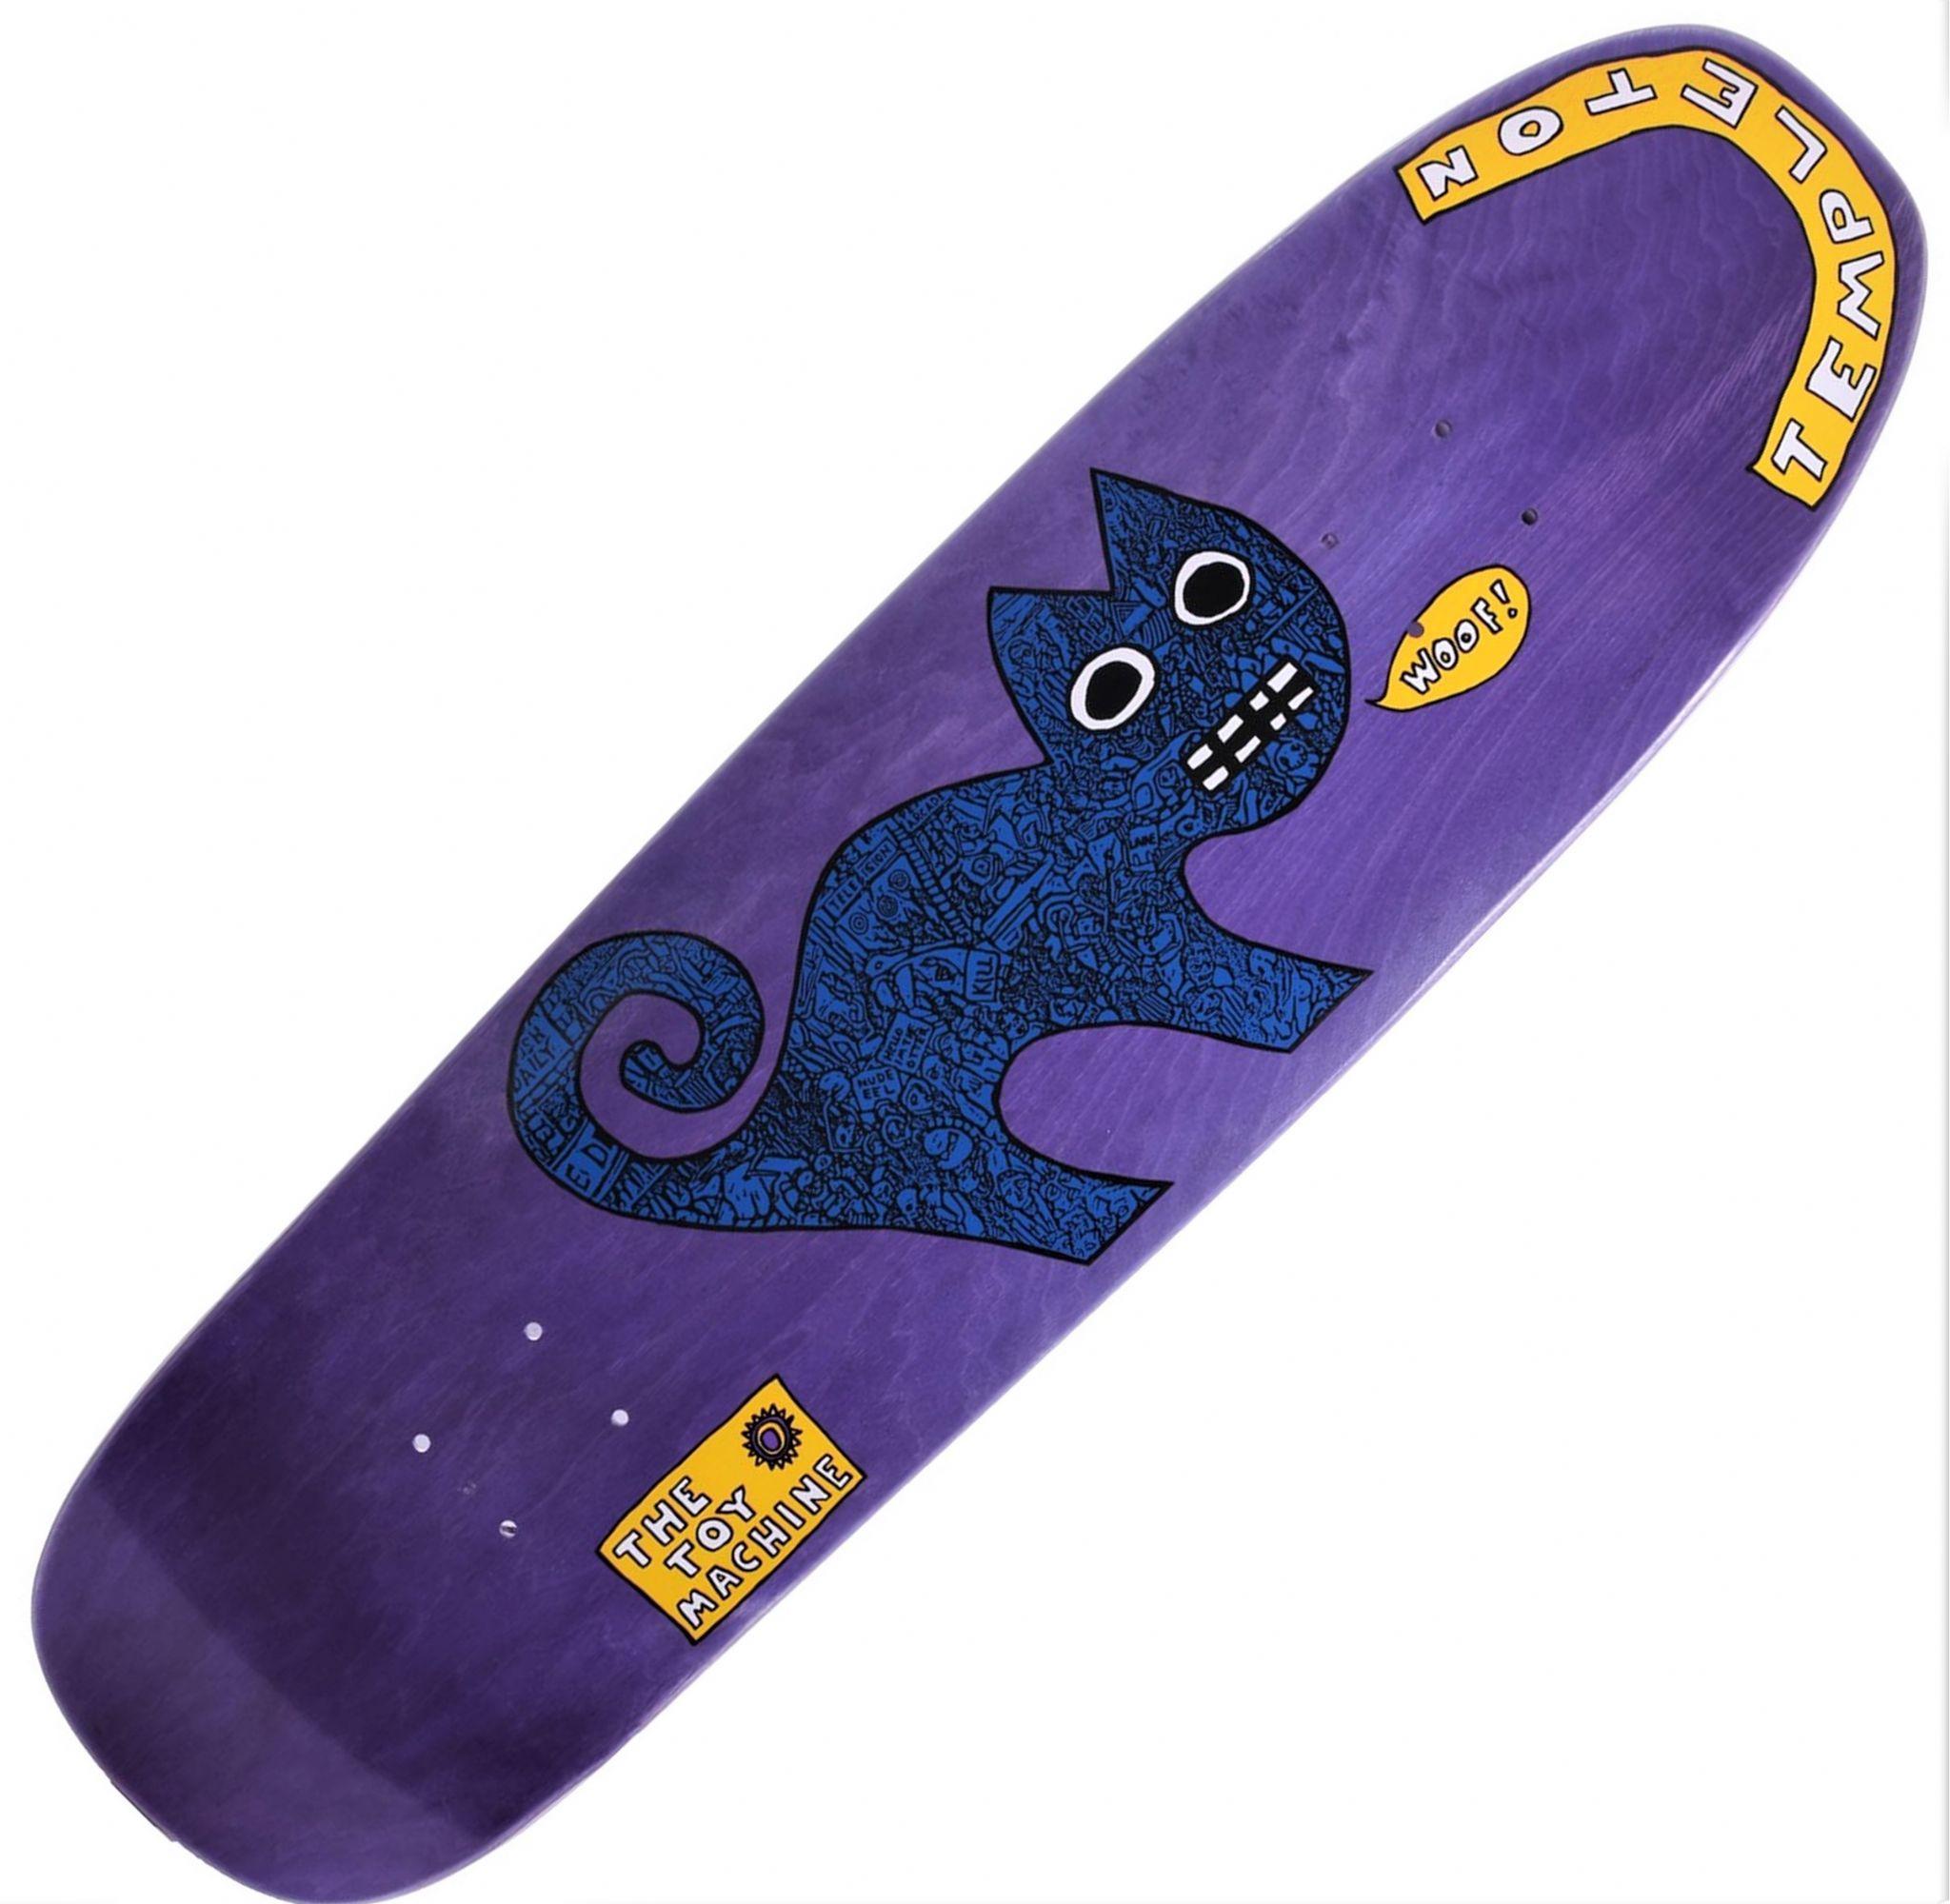 Old Toy Machine Logo - TOY MACHINE Ed Templeton Cat Skateboard Deck 8.75 x 31.25 BLUE Old